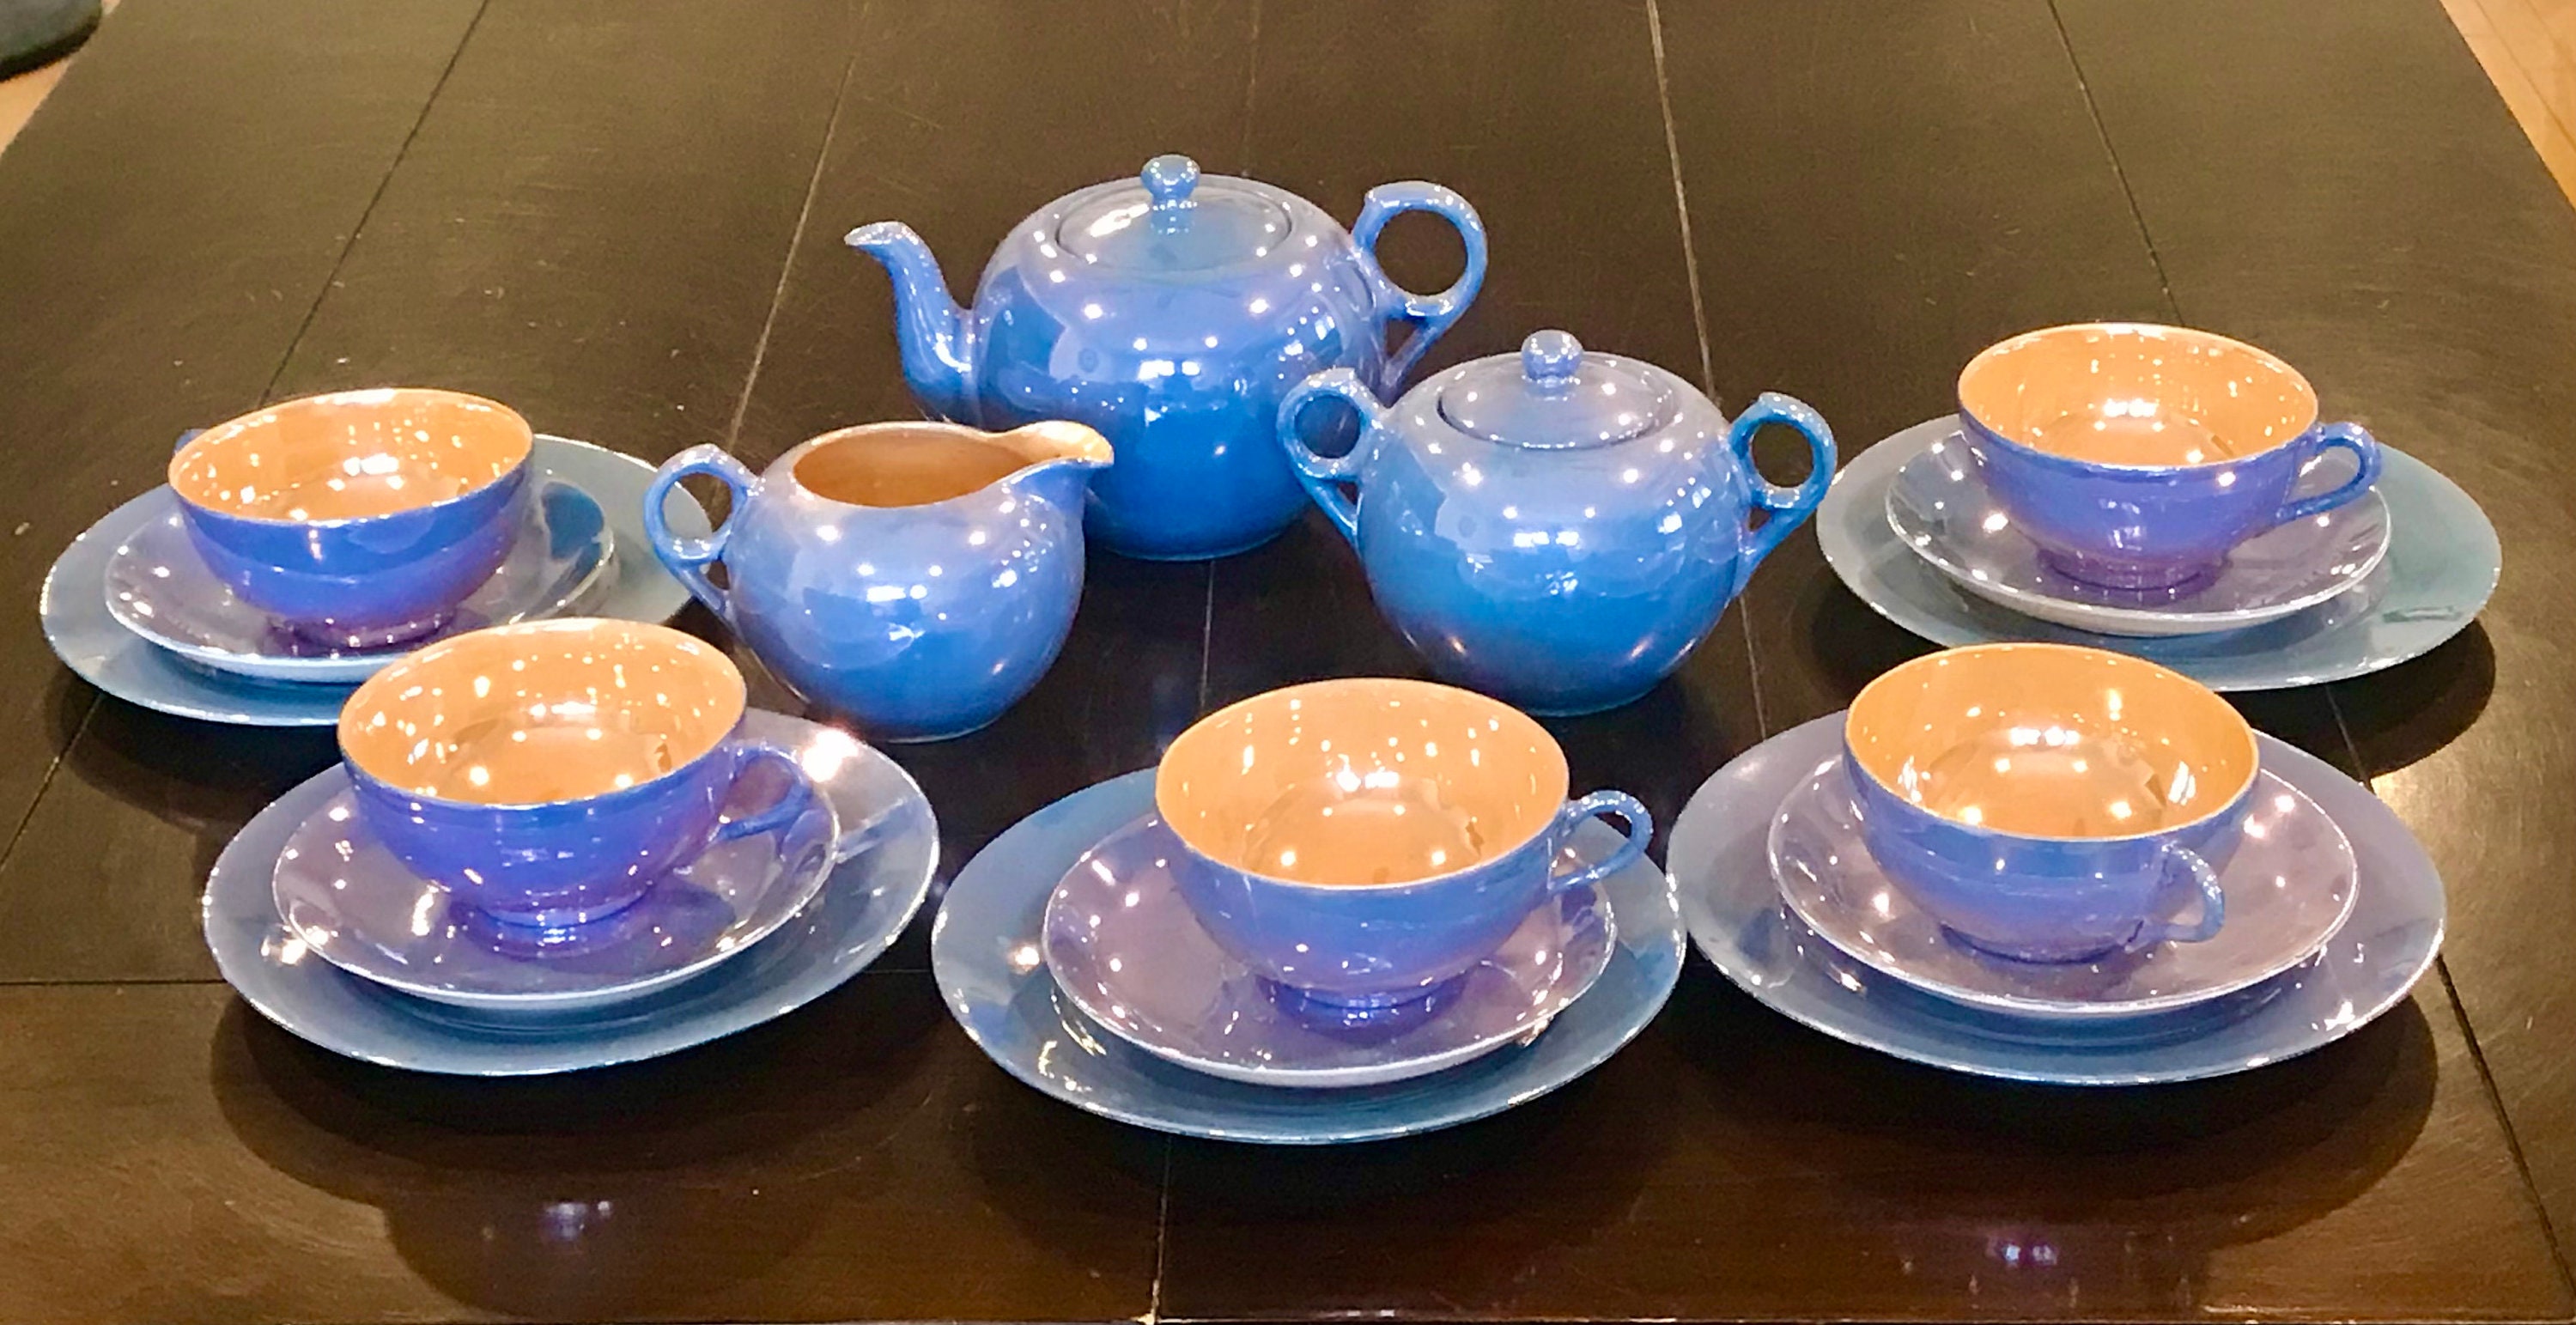 Classic Ceramic Travel Tea Set with infuser | Tea & Coffee Drinkware Shop